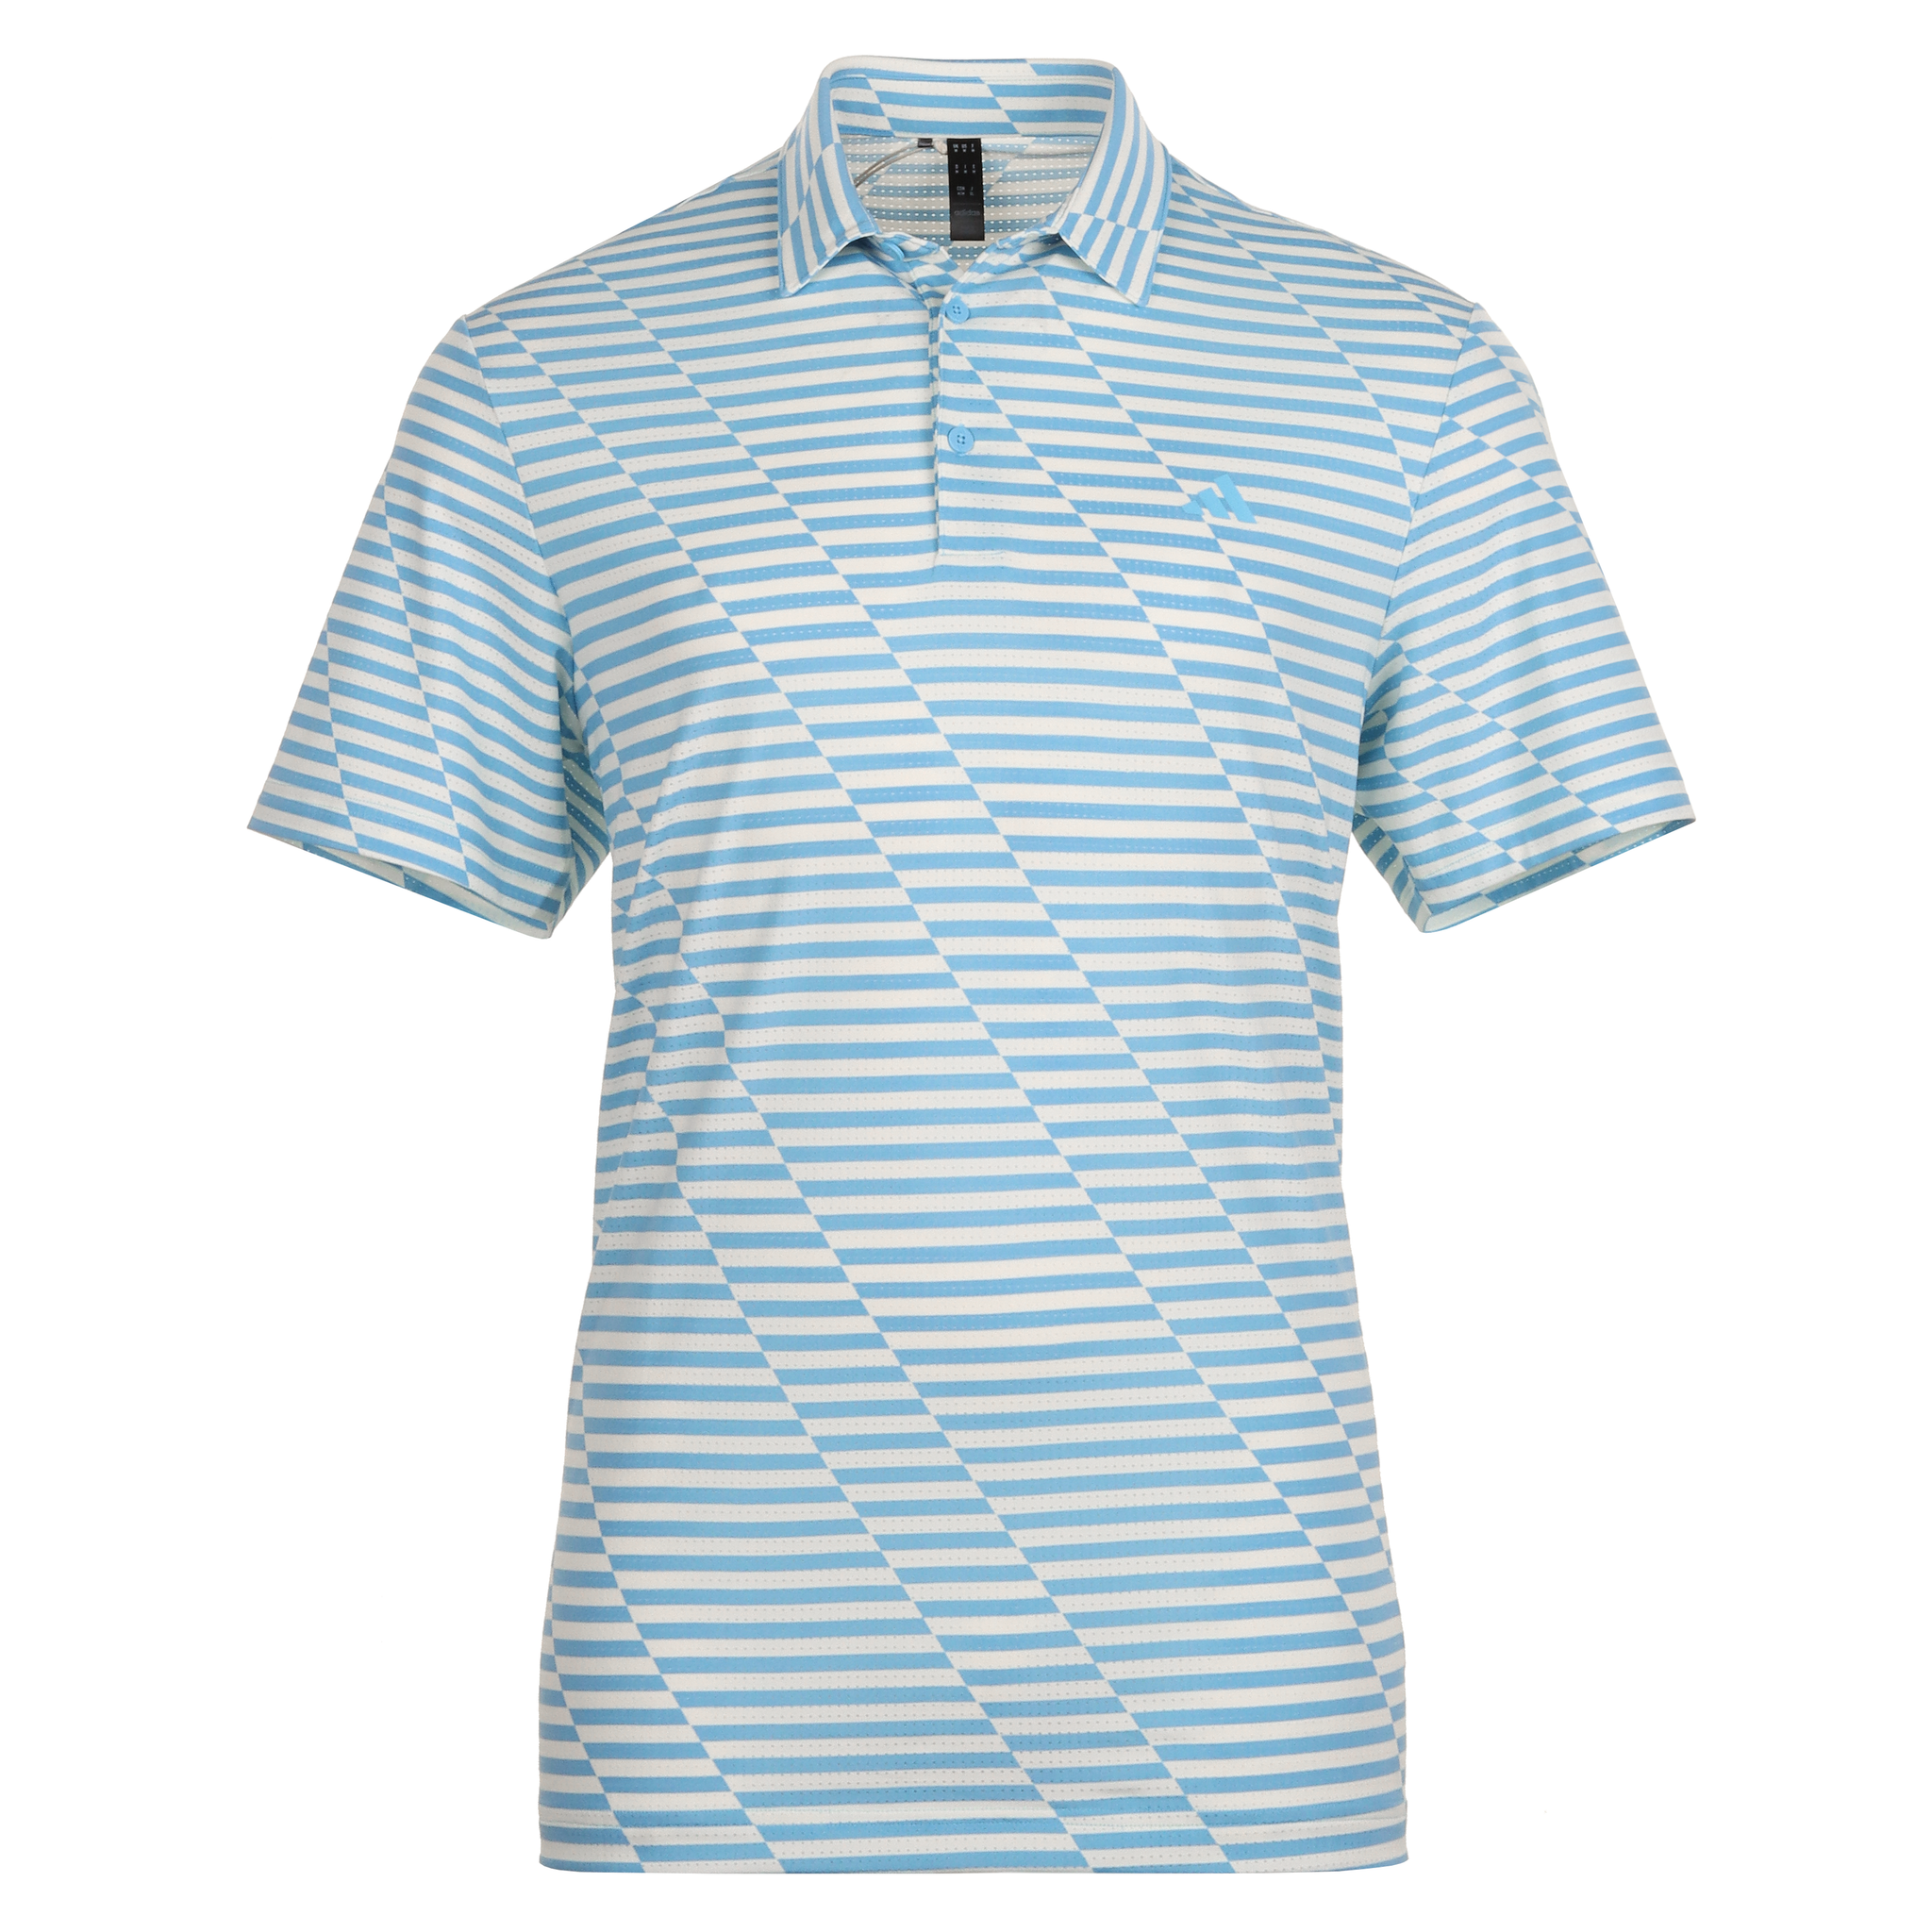 adidas Golf Ultimate365 Mesh Print Shirt